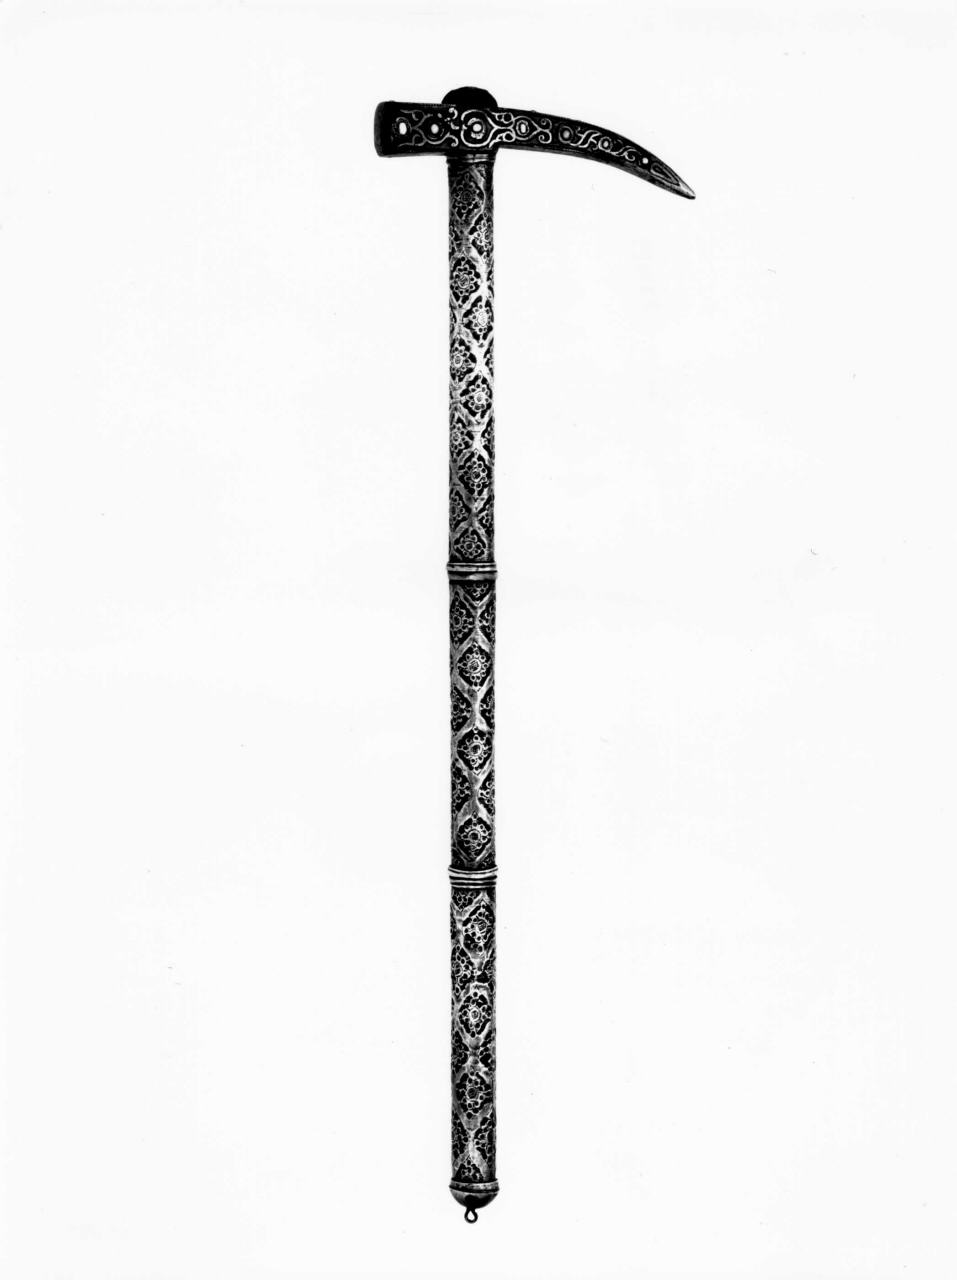 motivo decorativo floreale (martello d'arme - kulunk) - manifattura ottomana (?) (secc. XVII/ XVIII)